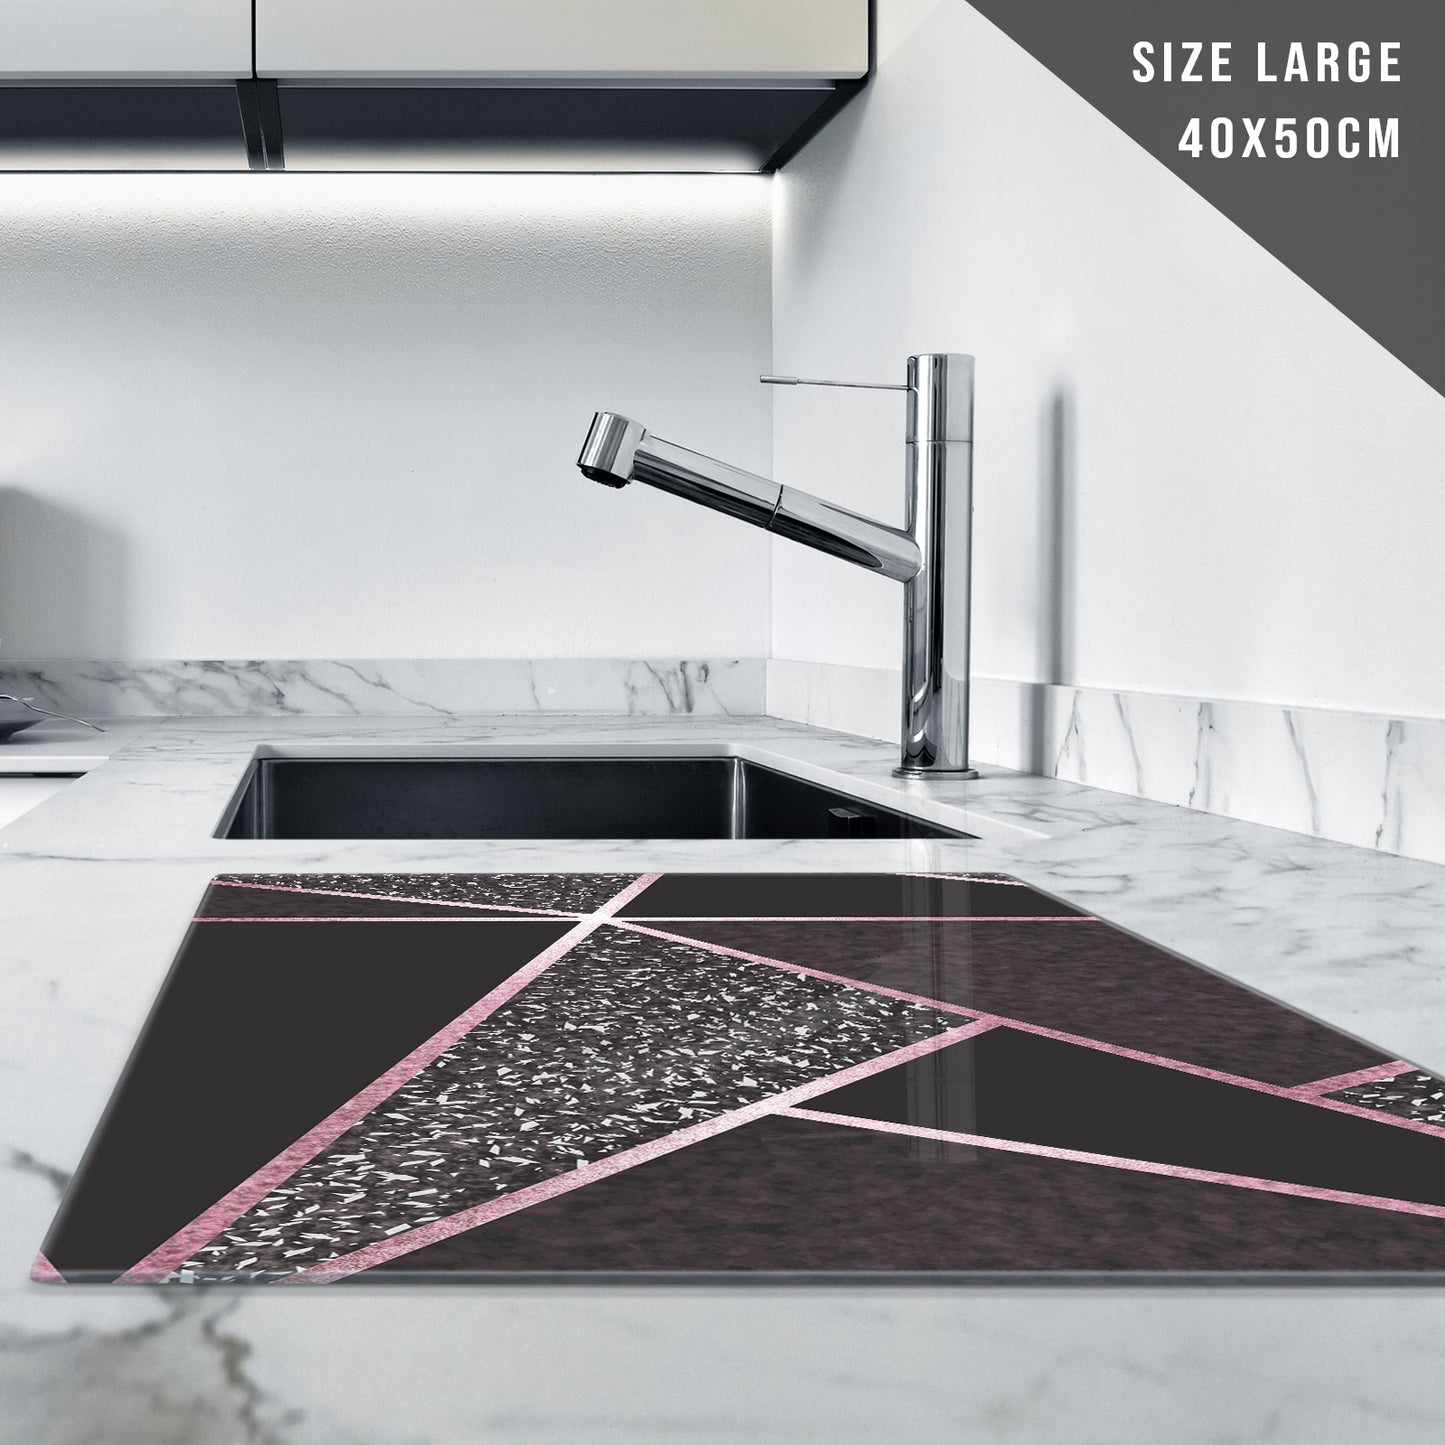 Glass Chopping Board in Black Pink Geometric Design